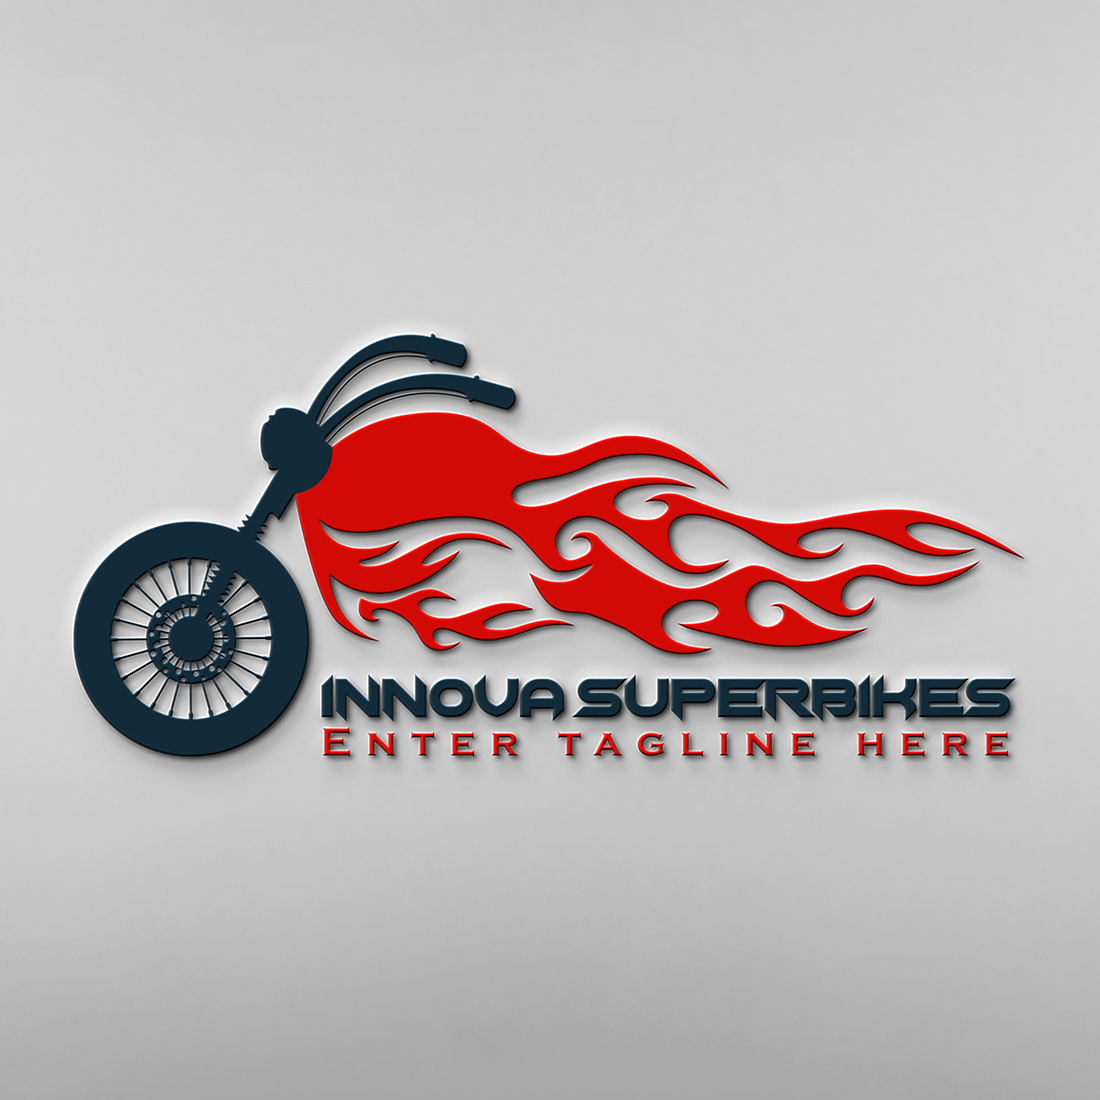 Motorbike logo cover image.